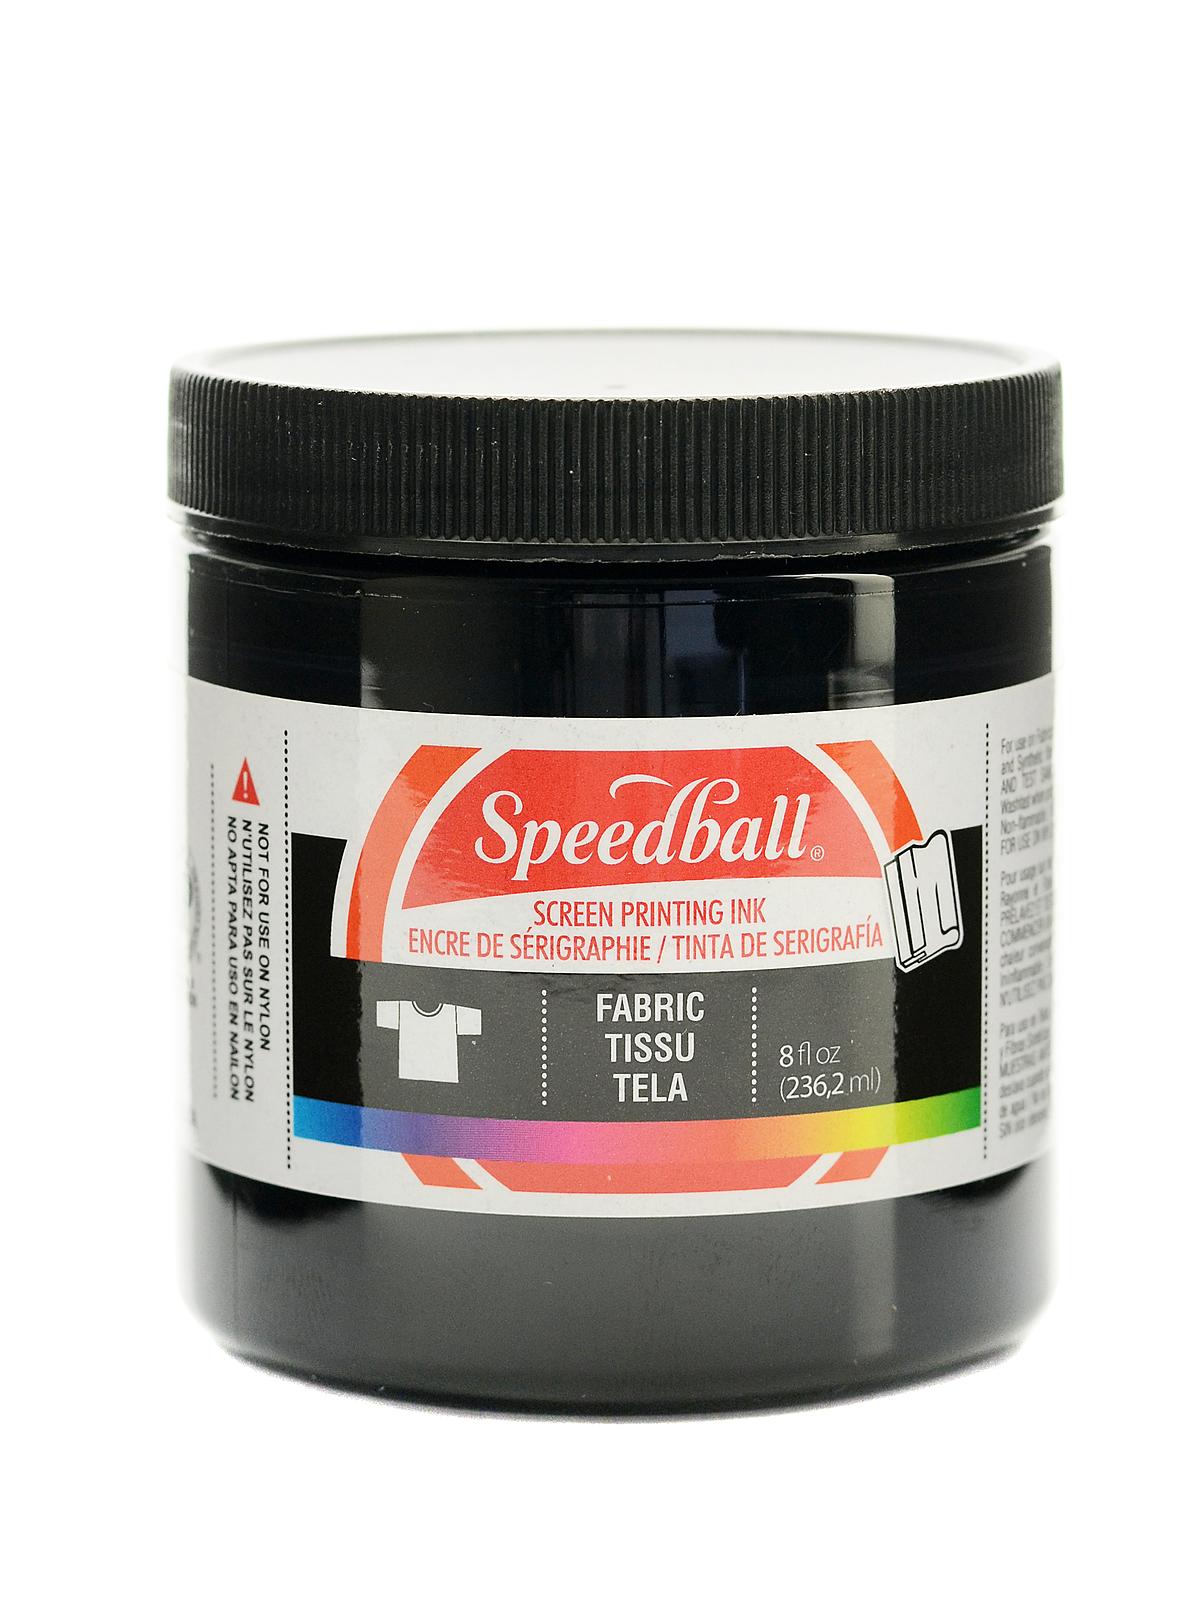 Speedball Fabric Screen Printing Ink - Fluorescent Magenta, 8 oz